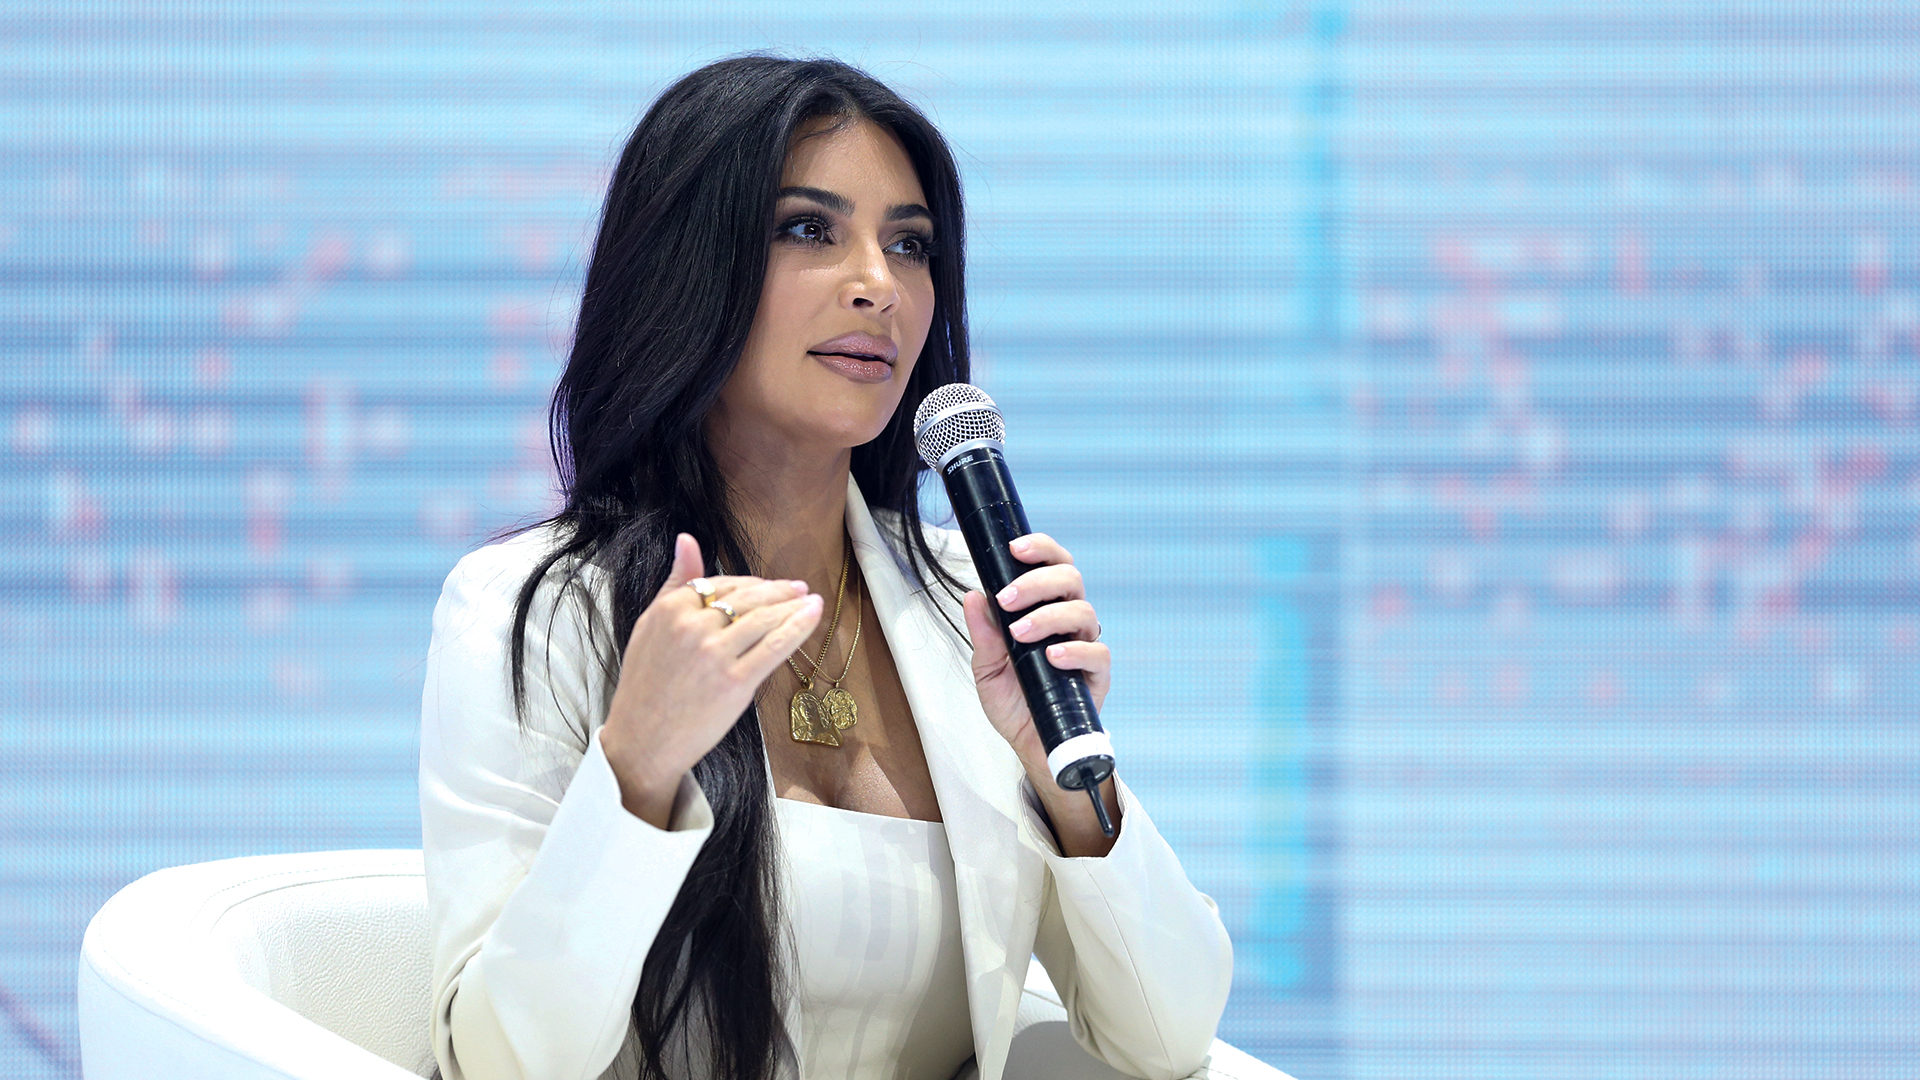 Kim speaks on a panel at WCIT Armenia in 2019